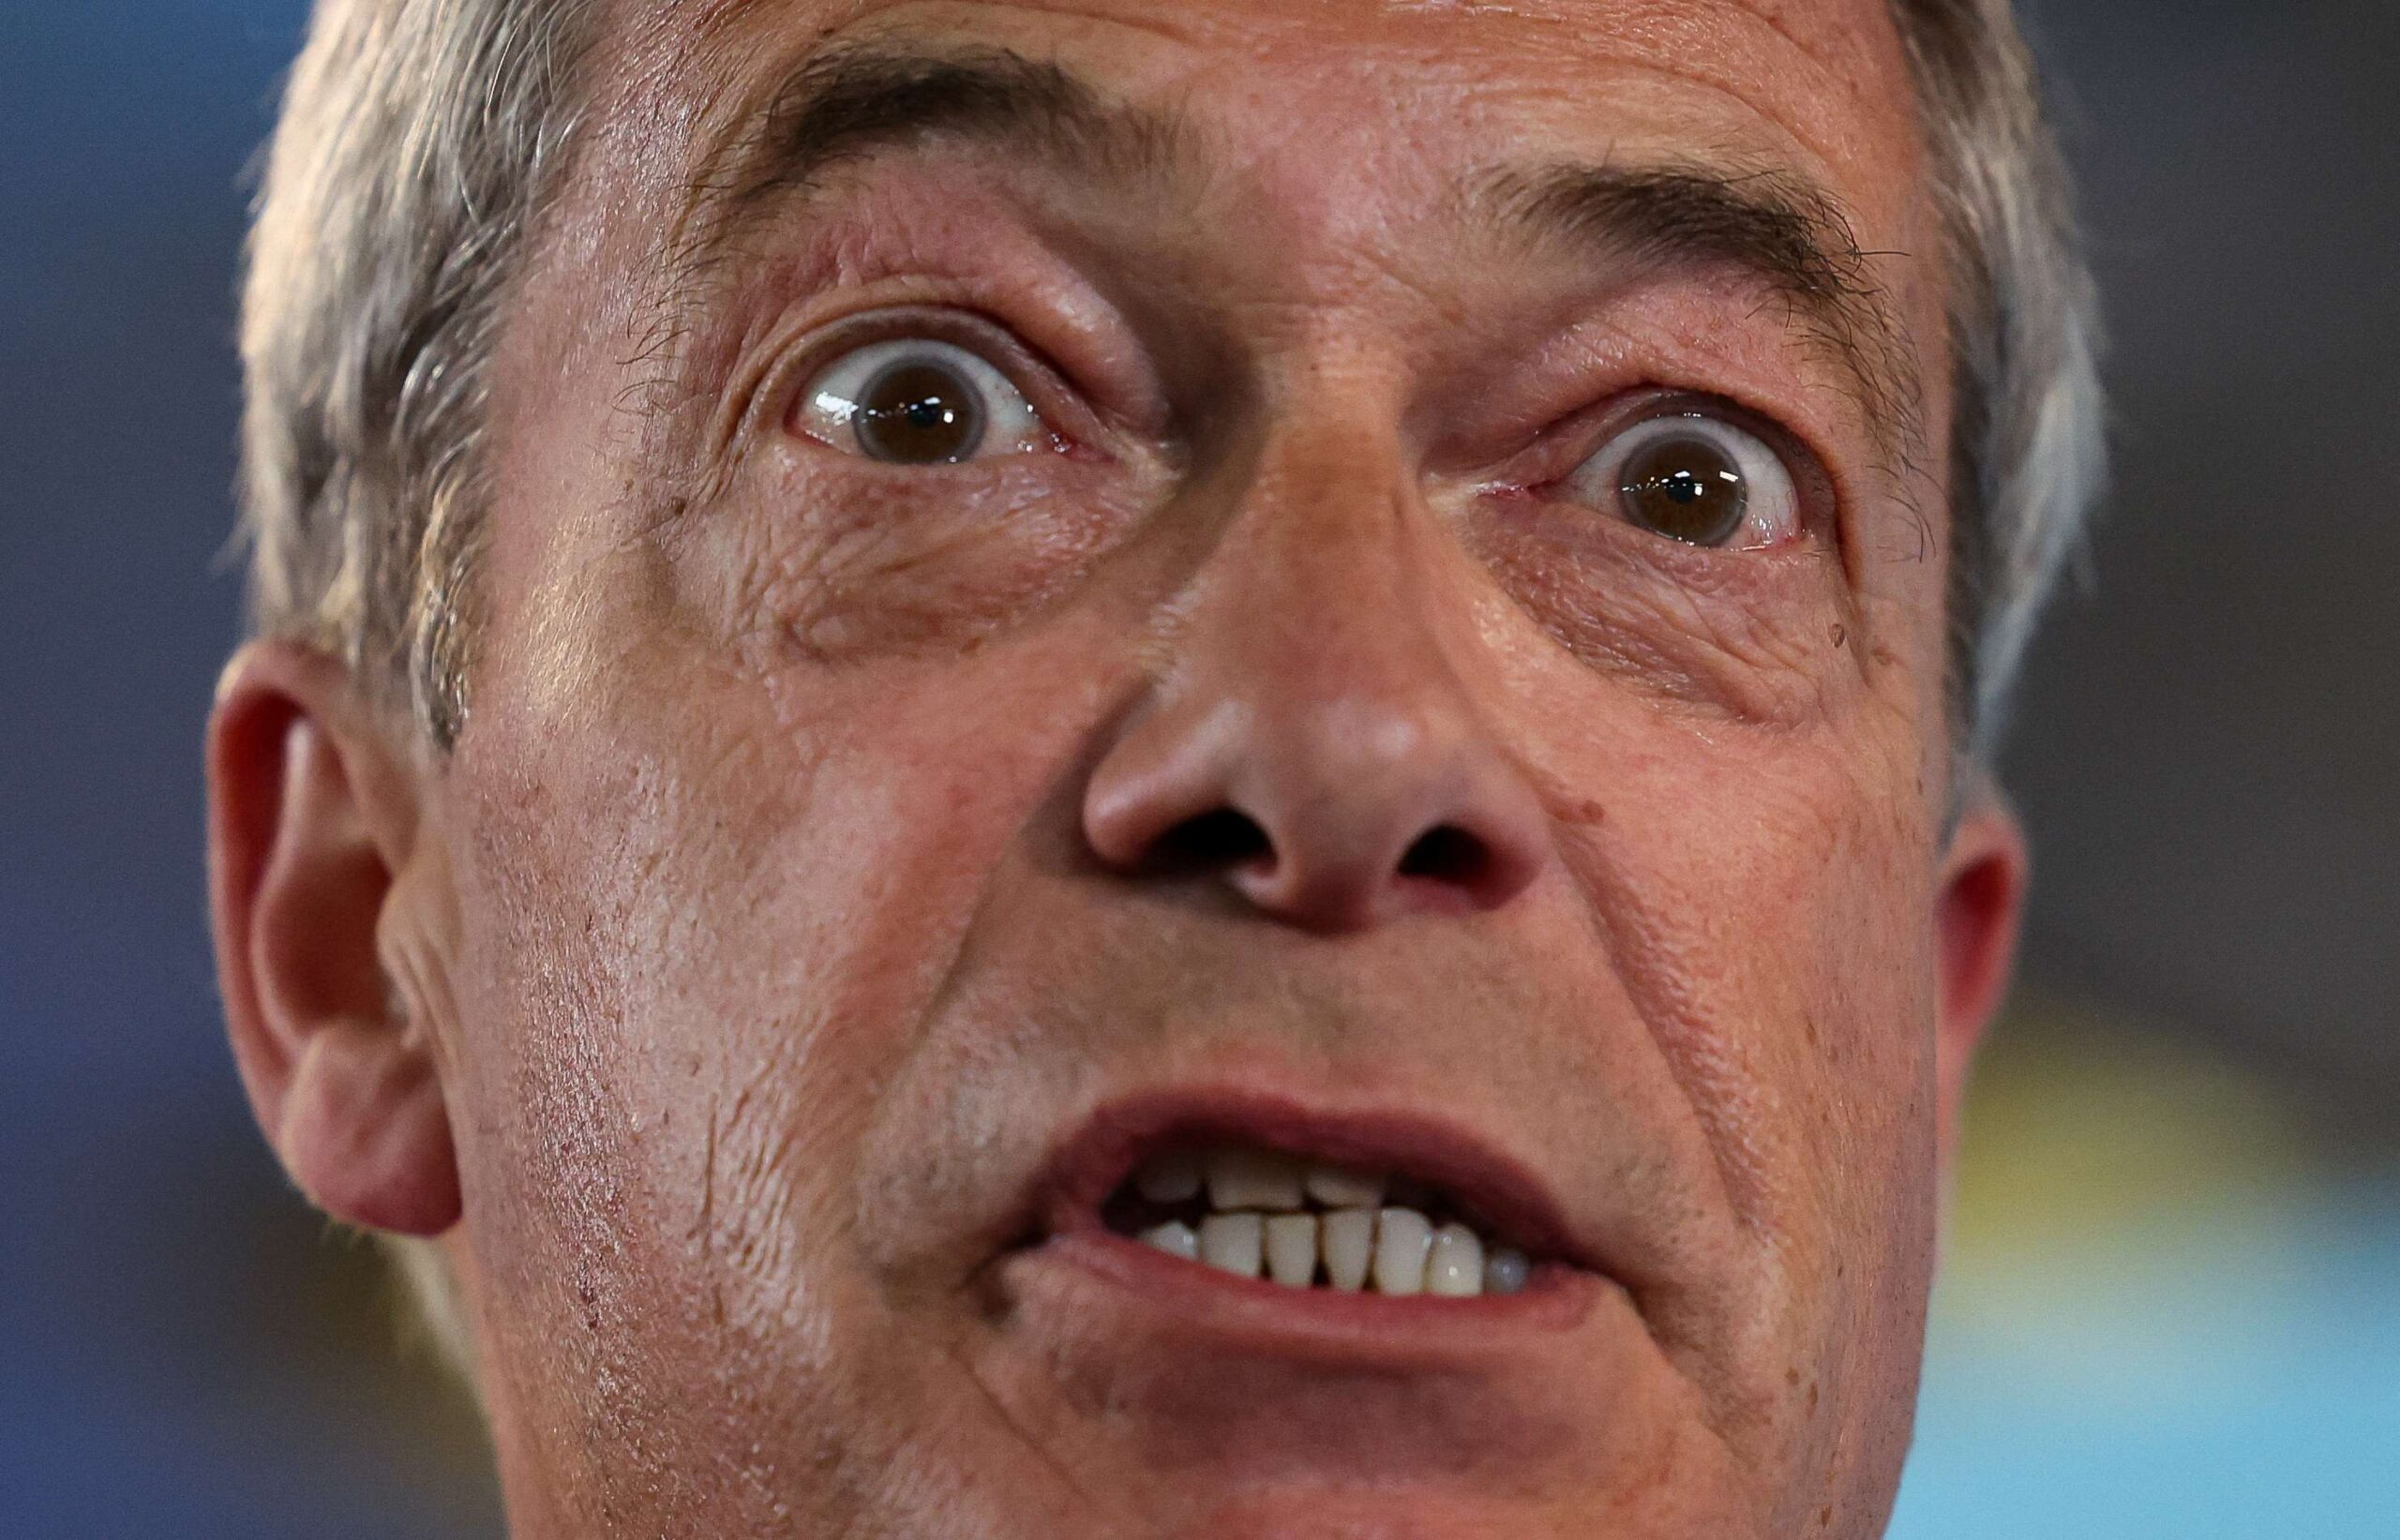 Direitista Farage promete fronteiras estreitas e menos impostos no Reino Unido